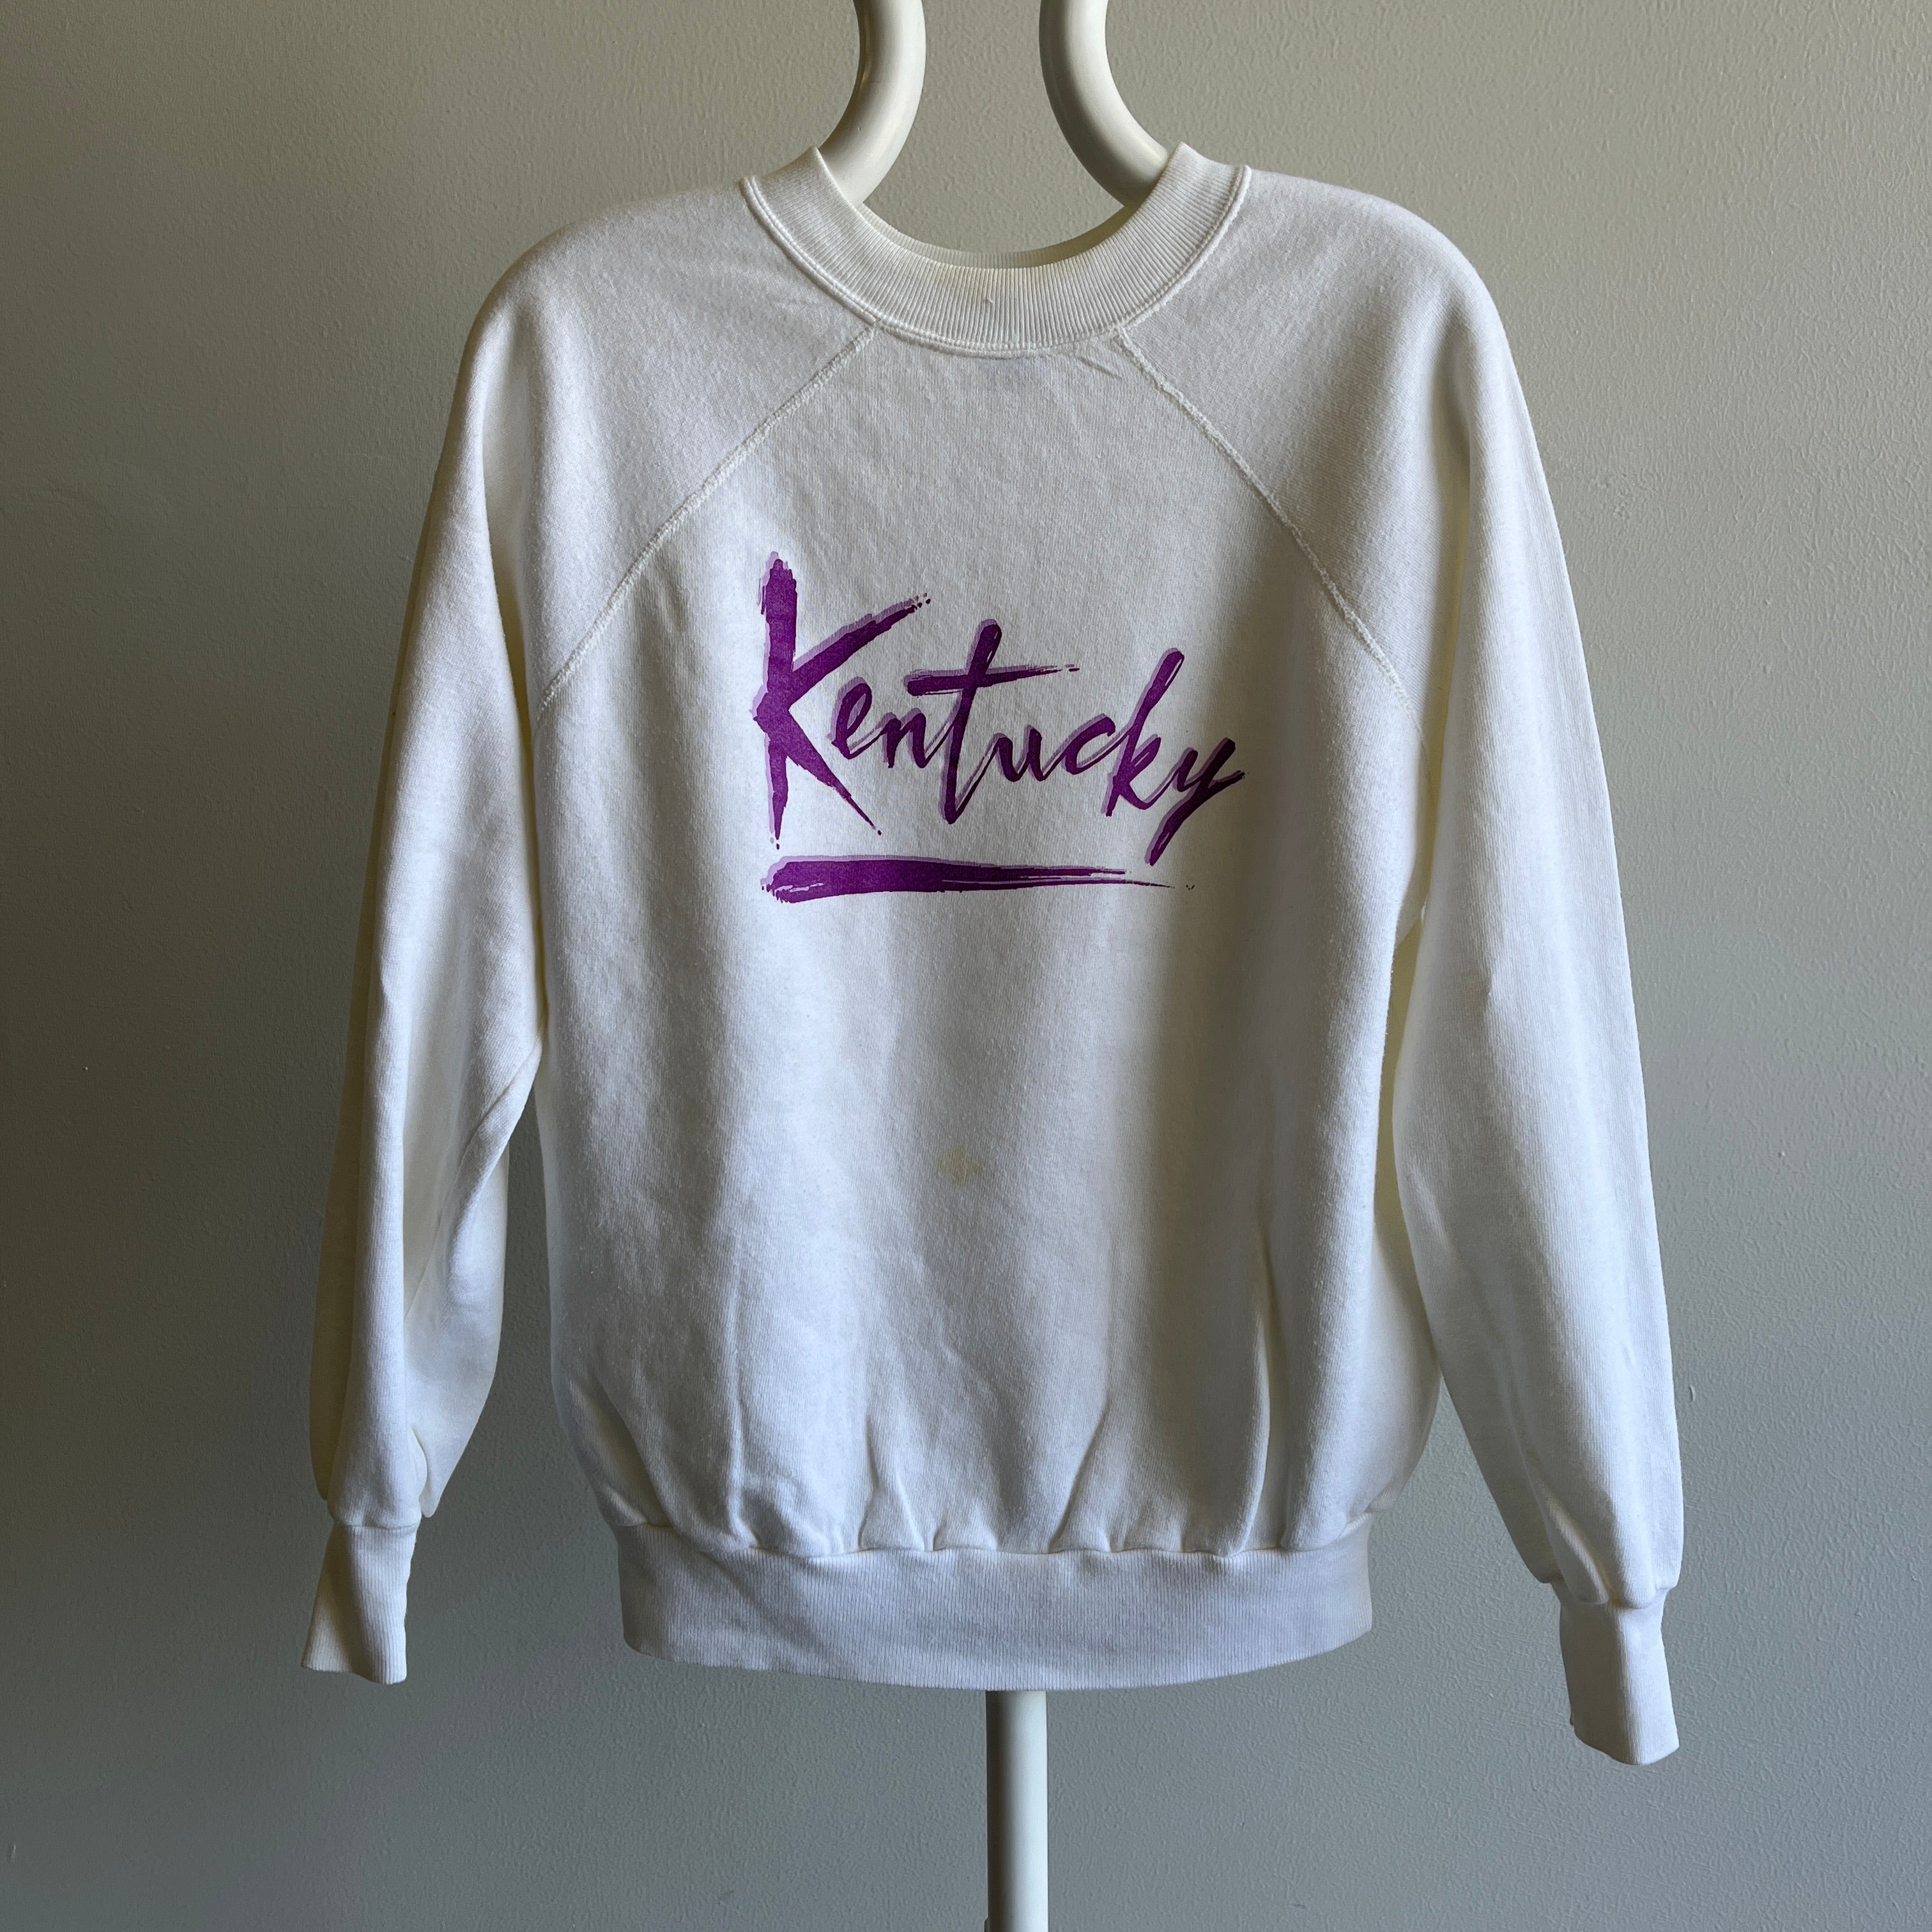 1980s Kentucky Tourist Sweatshirt